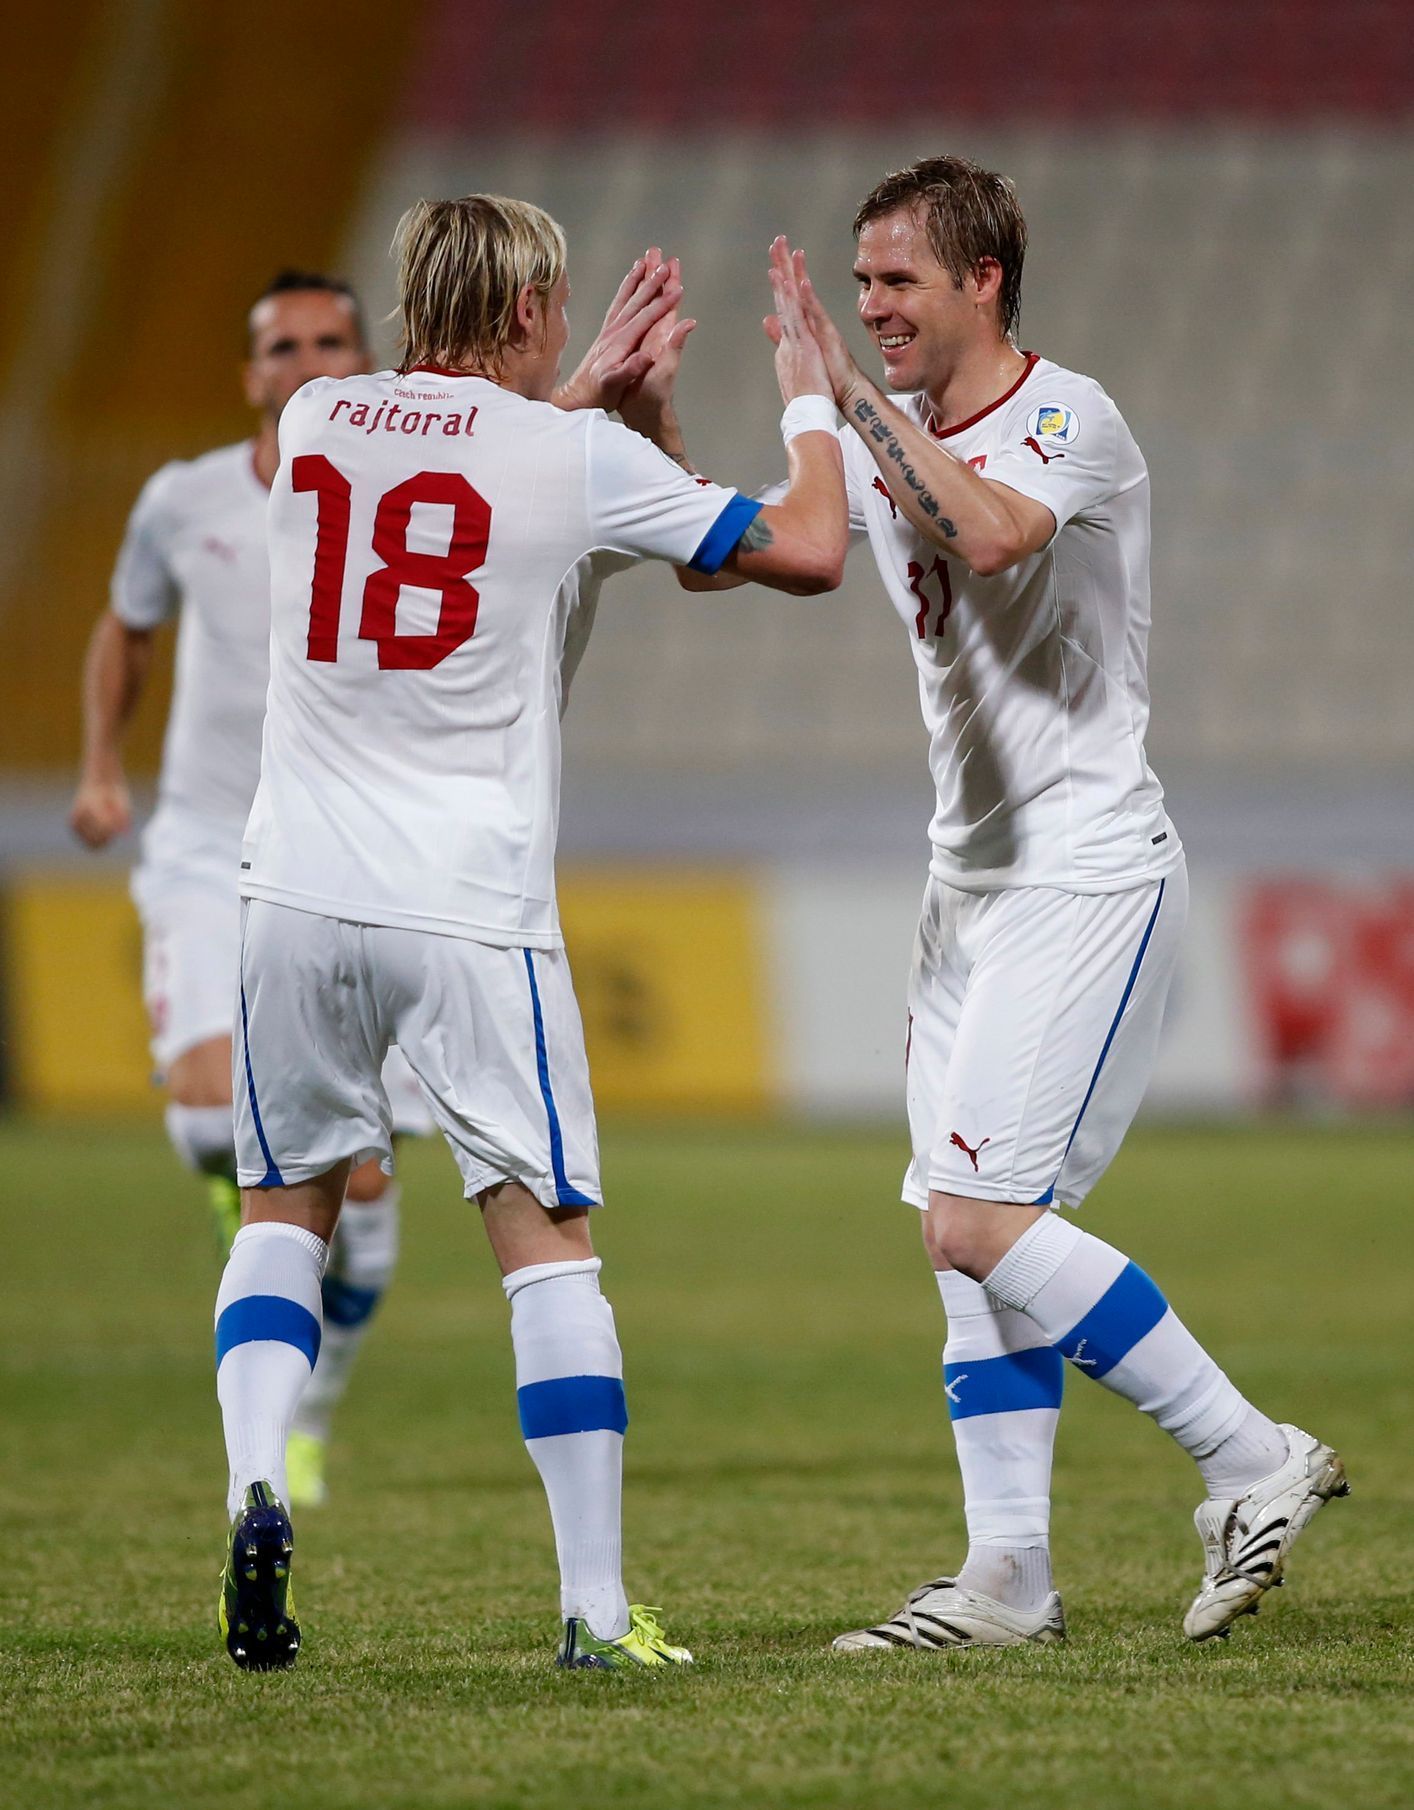 Malta - Česko, kvalifikace o postup na MS ve fotbale 2014